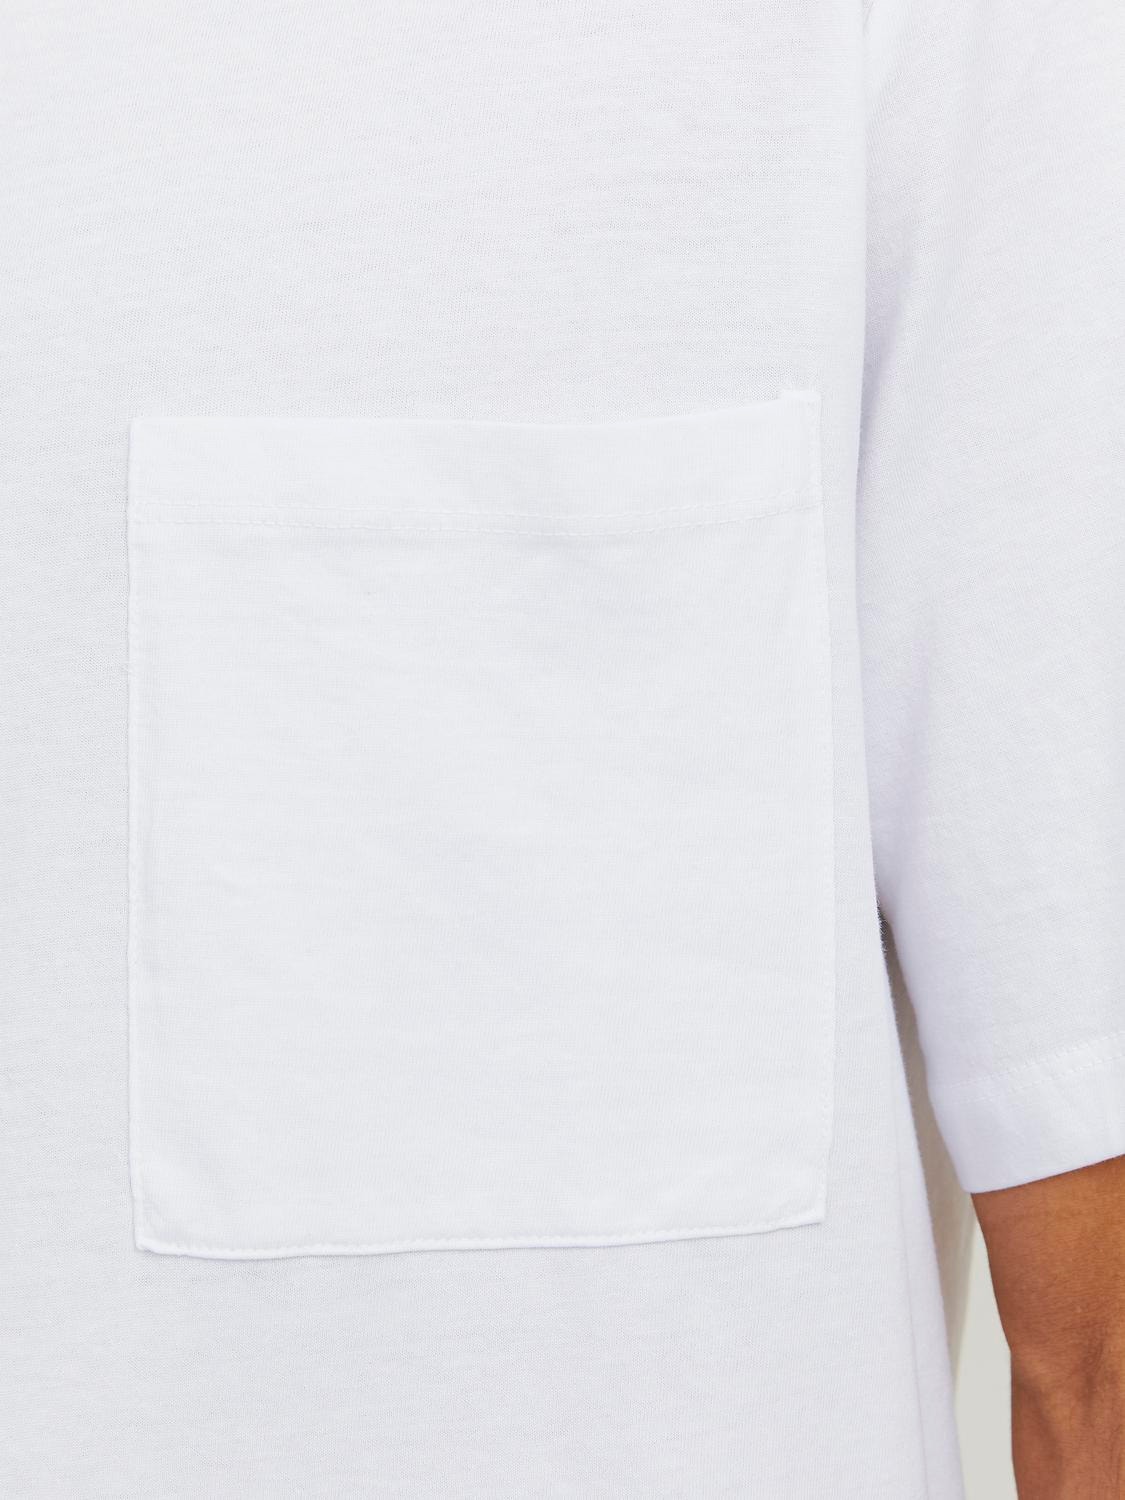 Jack & Jones Long Line Fit O-Neck Noa T-Shirt -White - 12210945